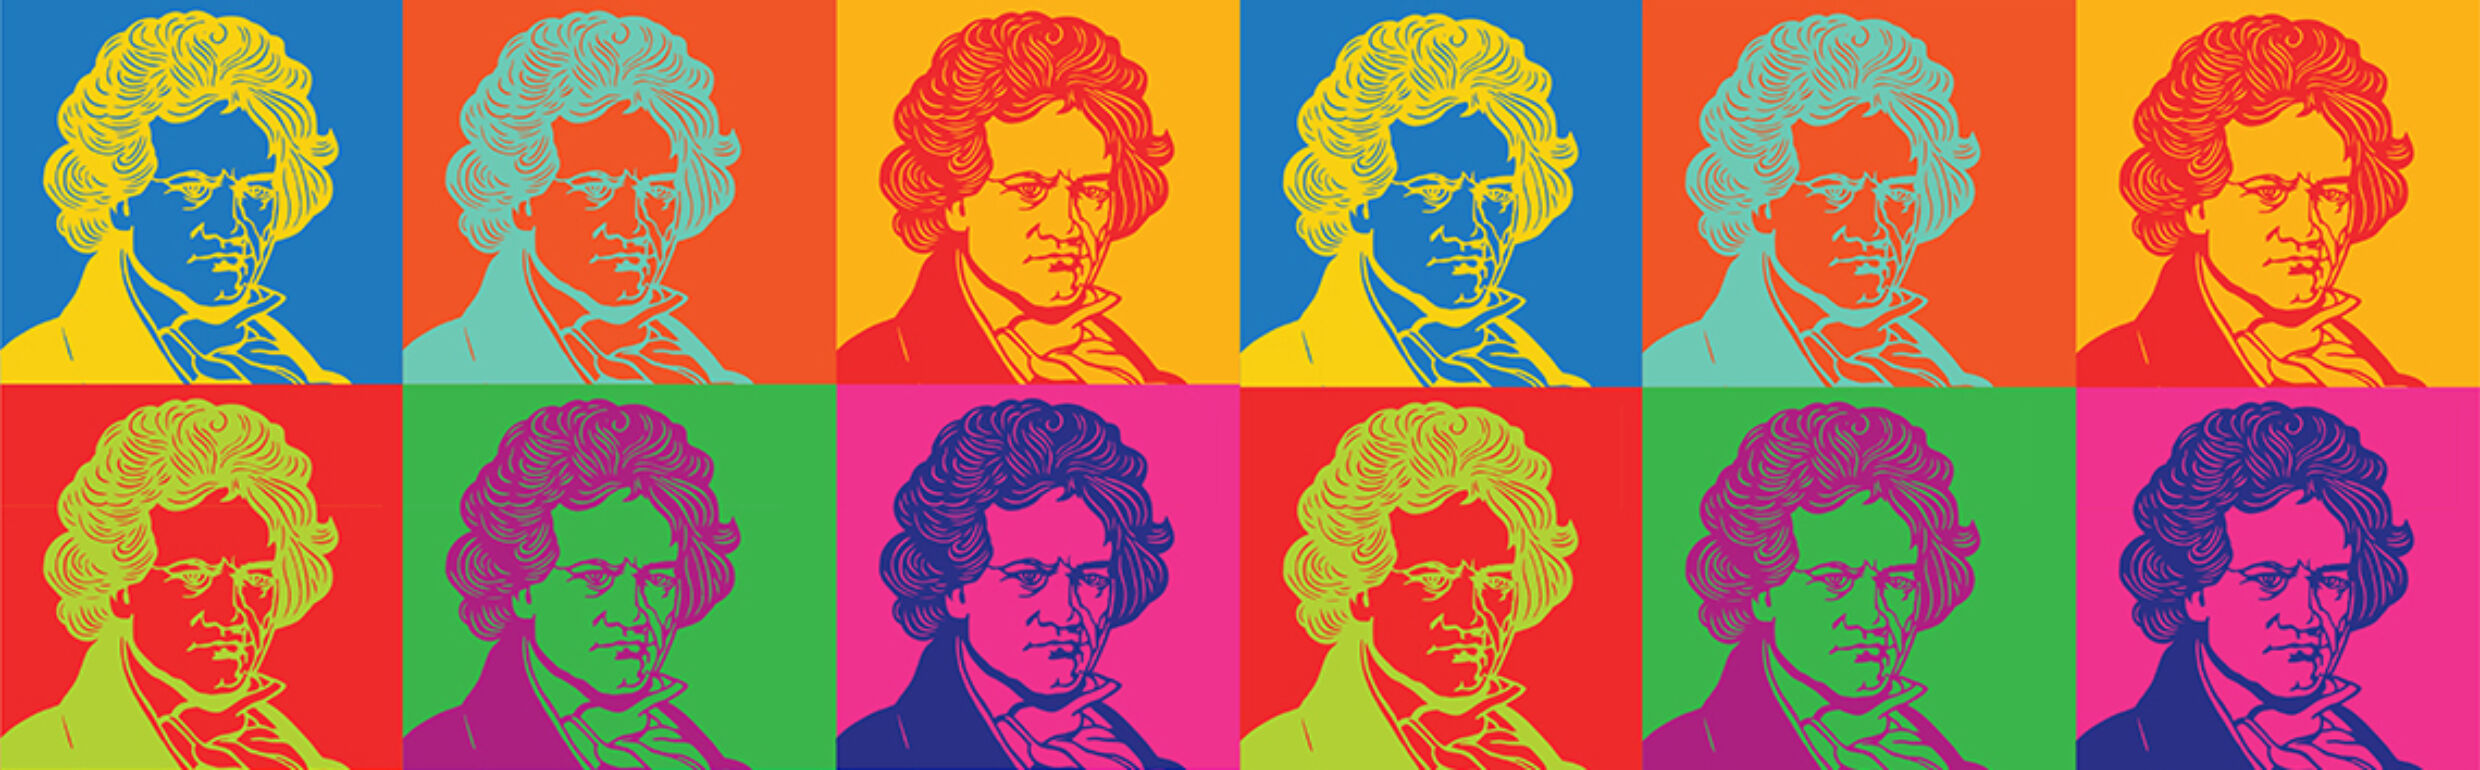 Beethoven Banner